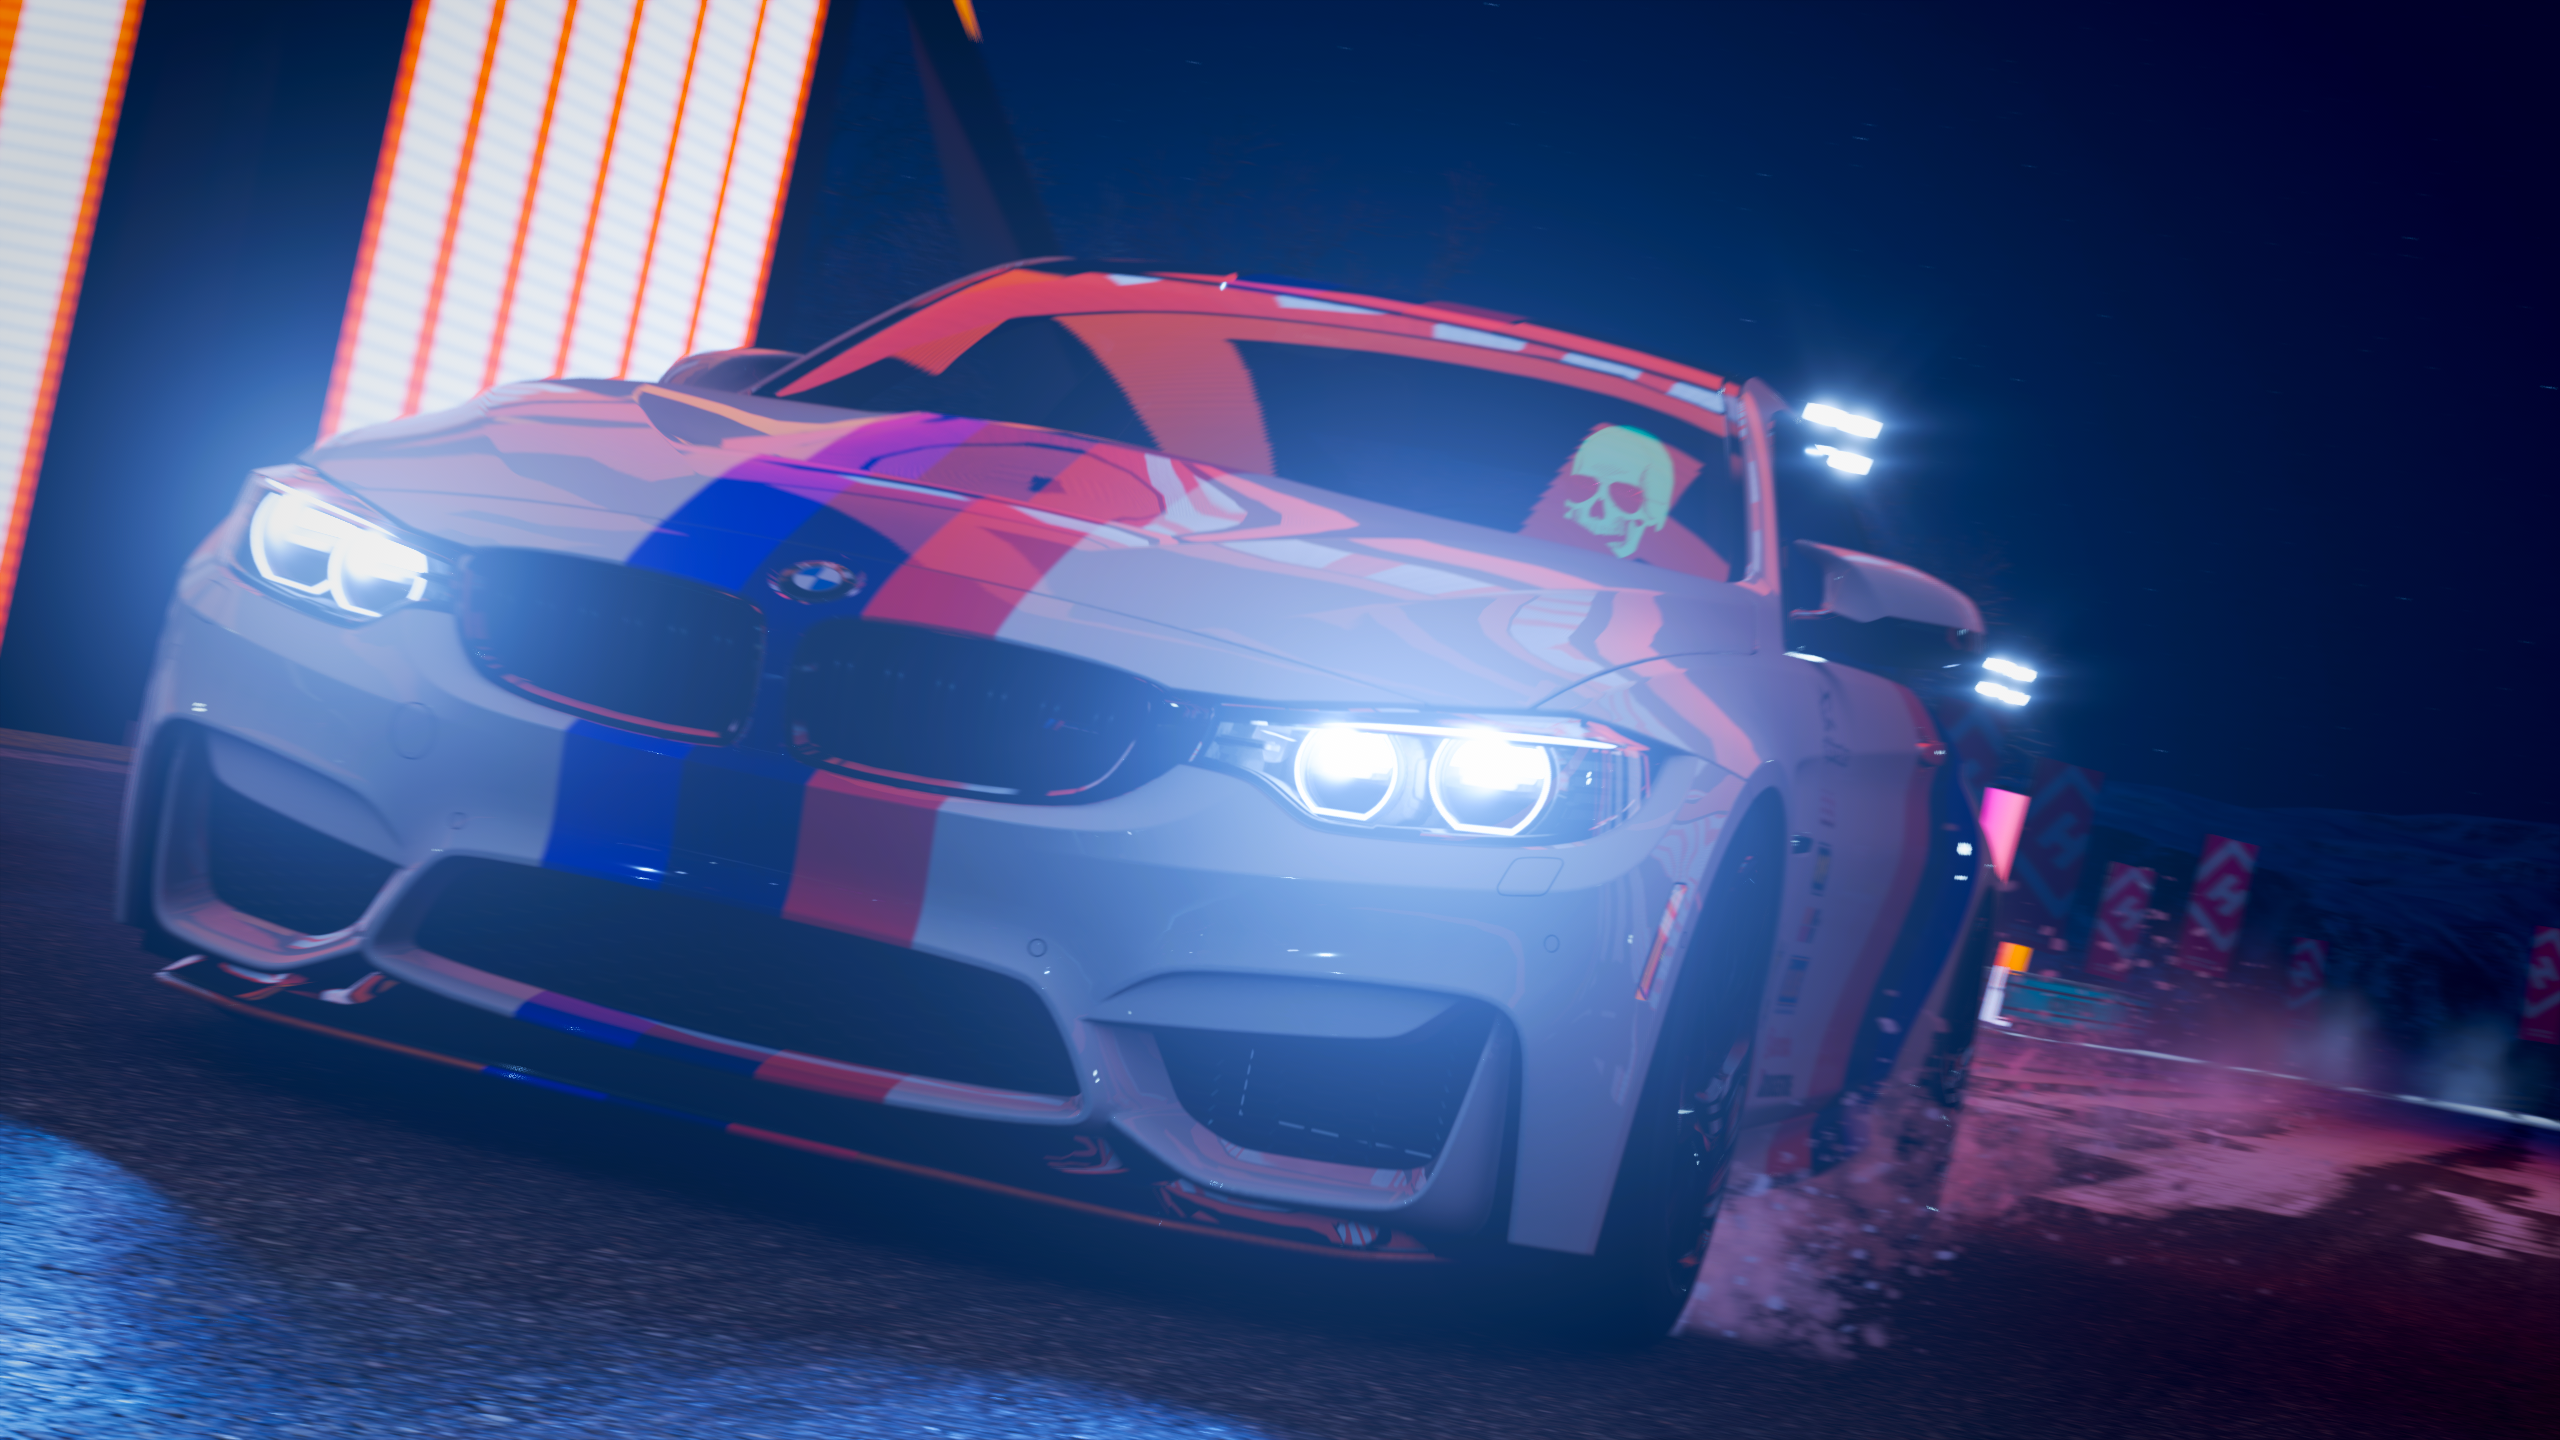 Car Night LED Headlight BMW BMW M4 Vehicle Video Games Forza Forza Games Forza Horizon Forza Horizon 2560x1440